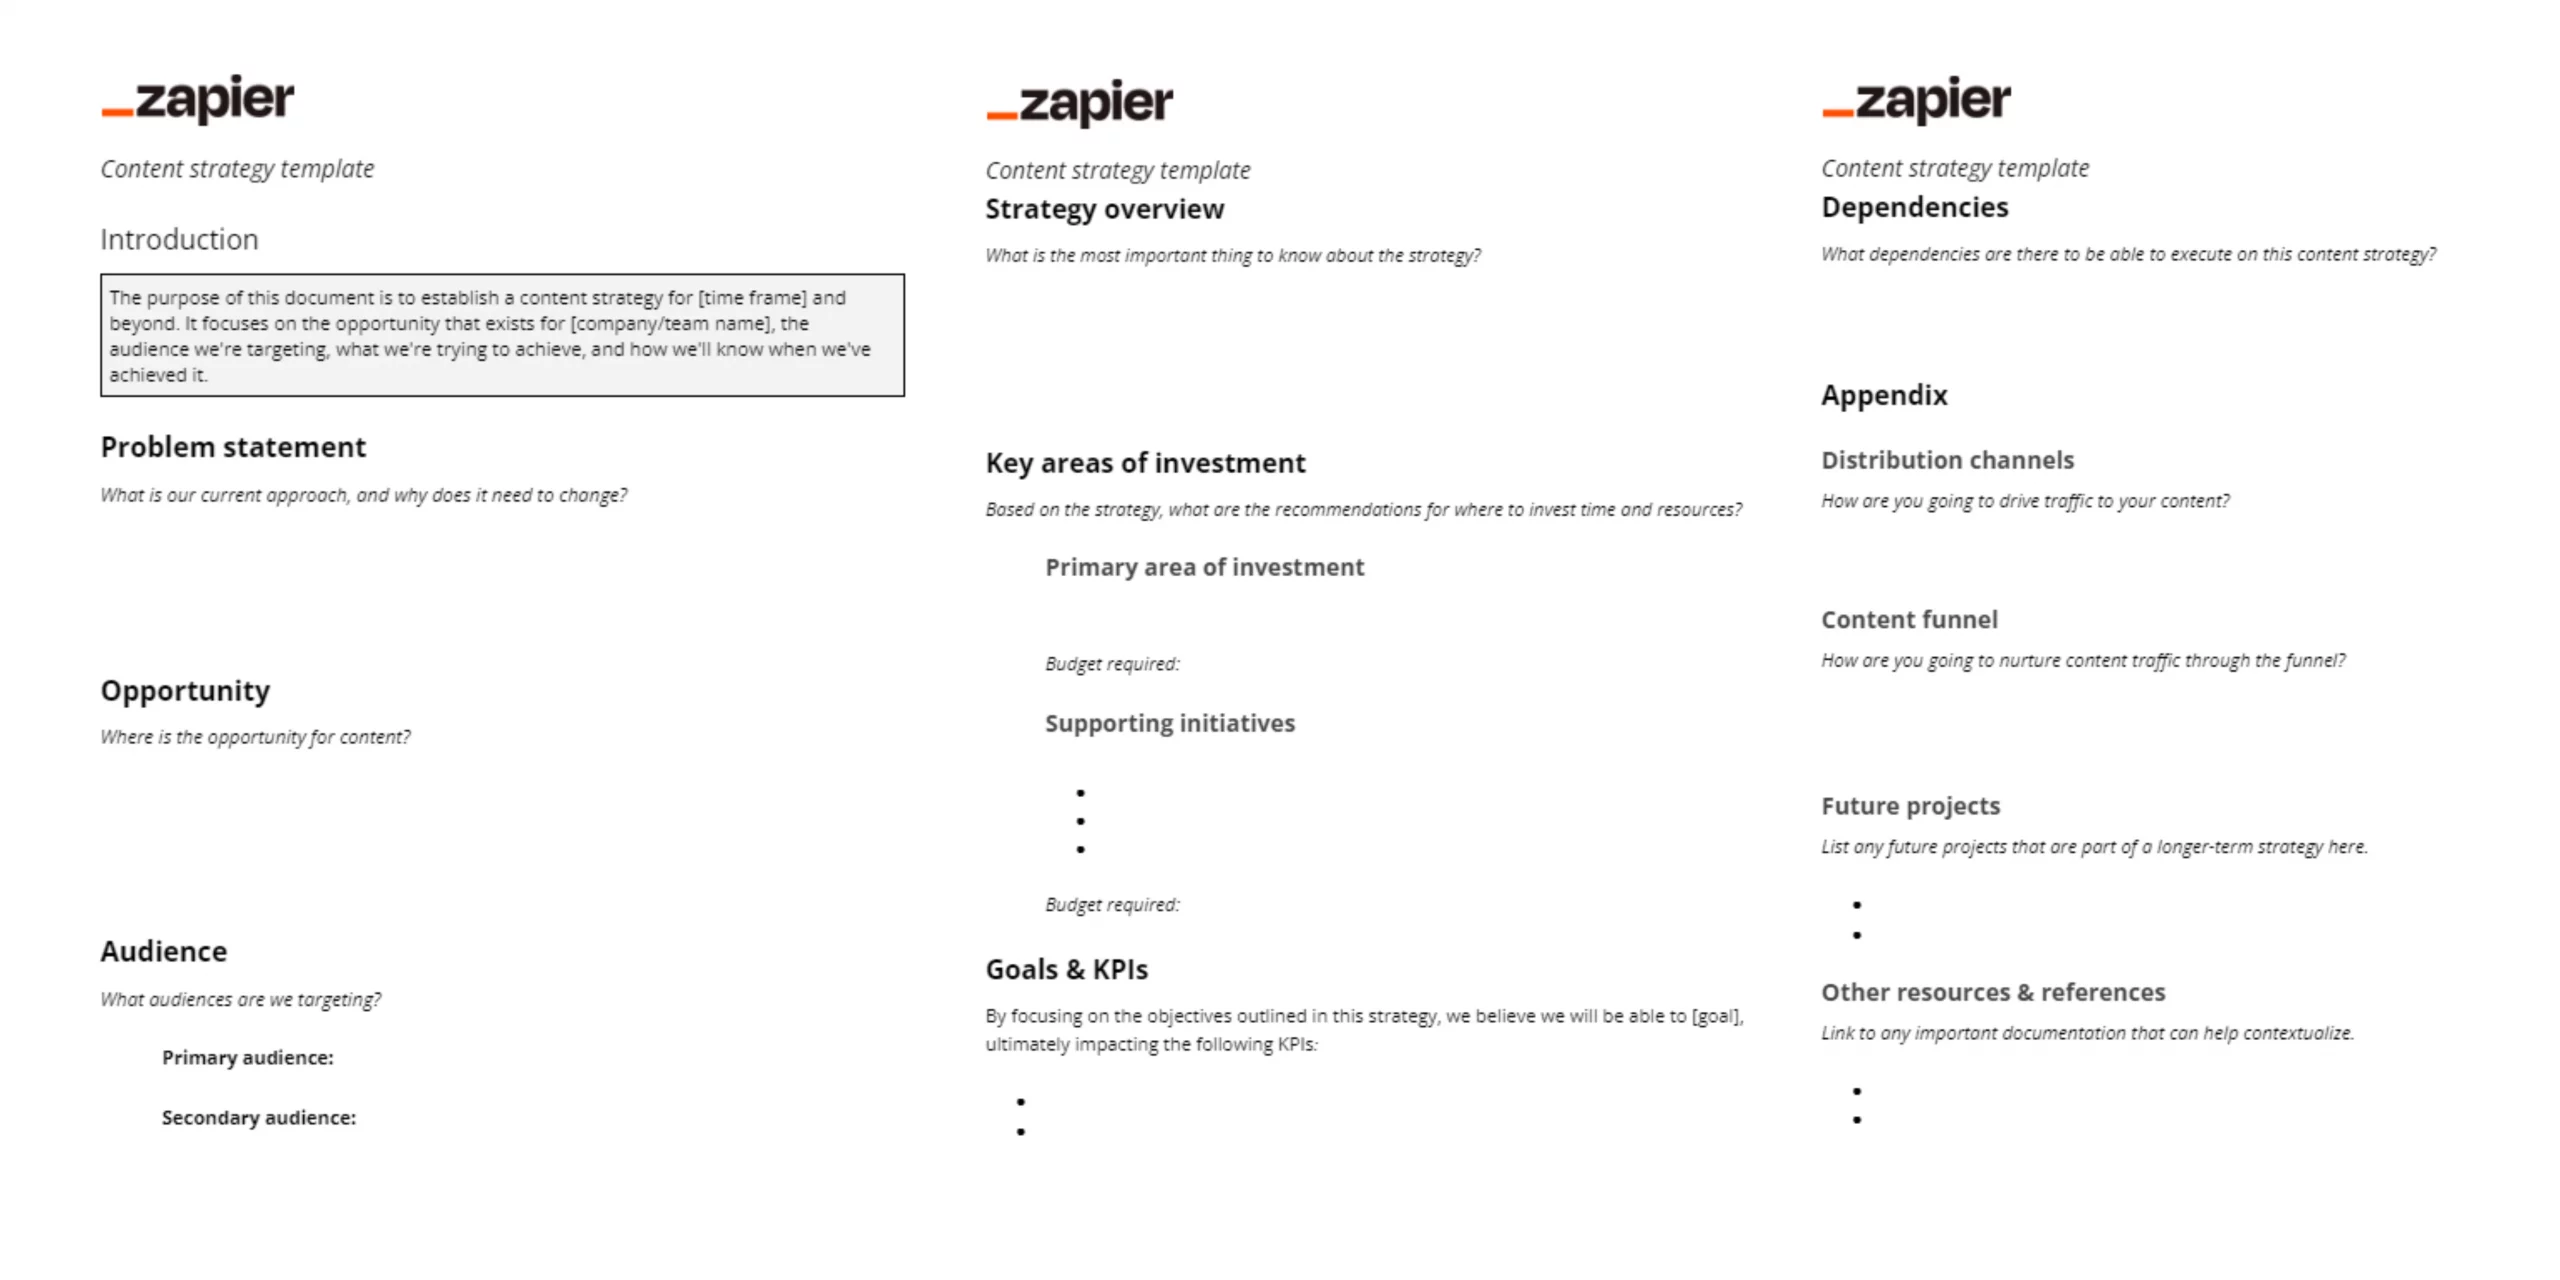 Zapier's Content Strategy Template